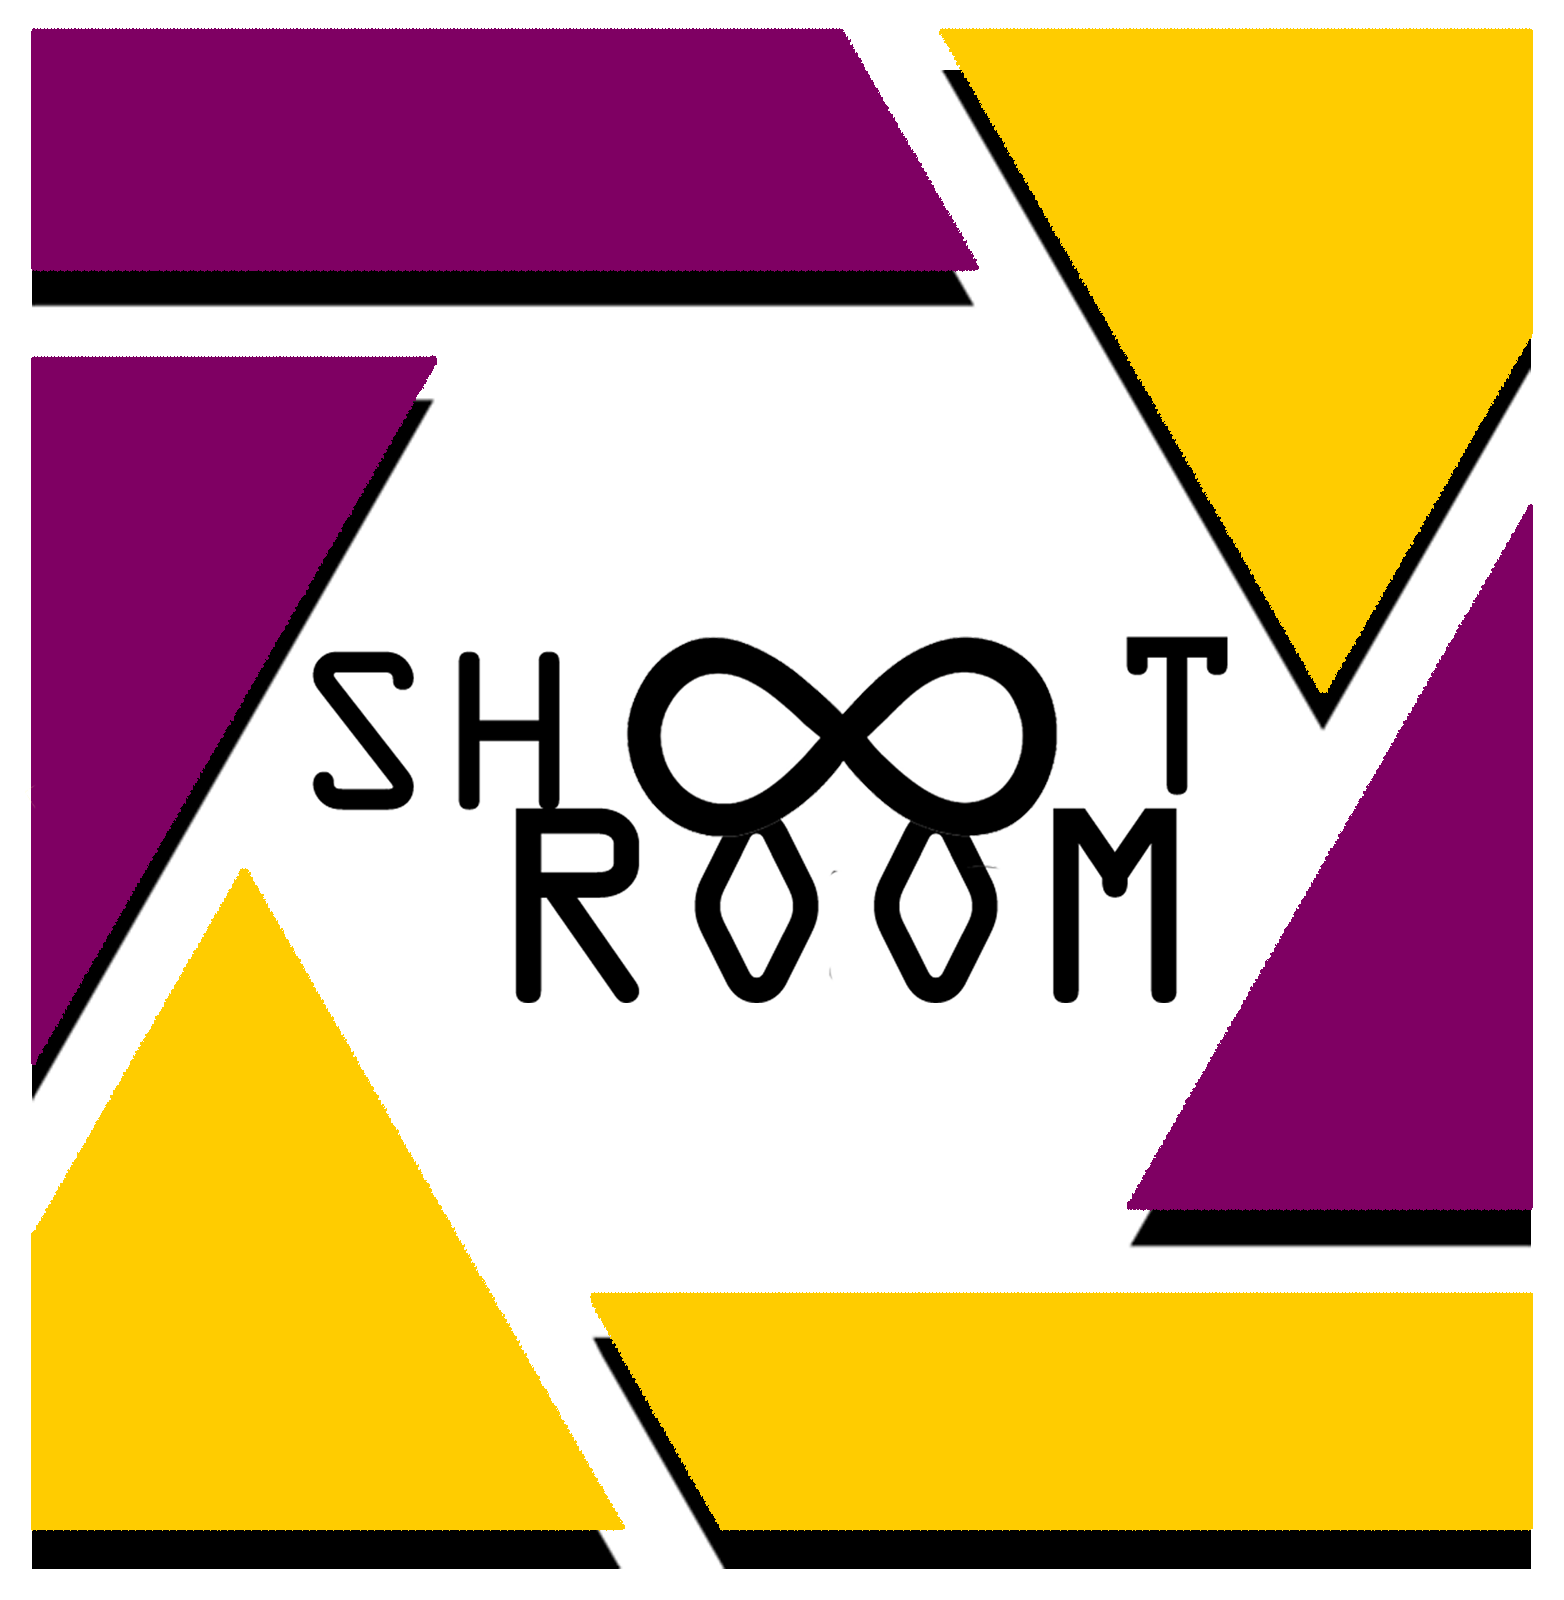 Shoot Room